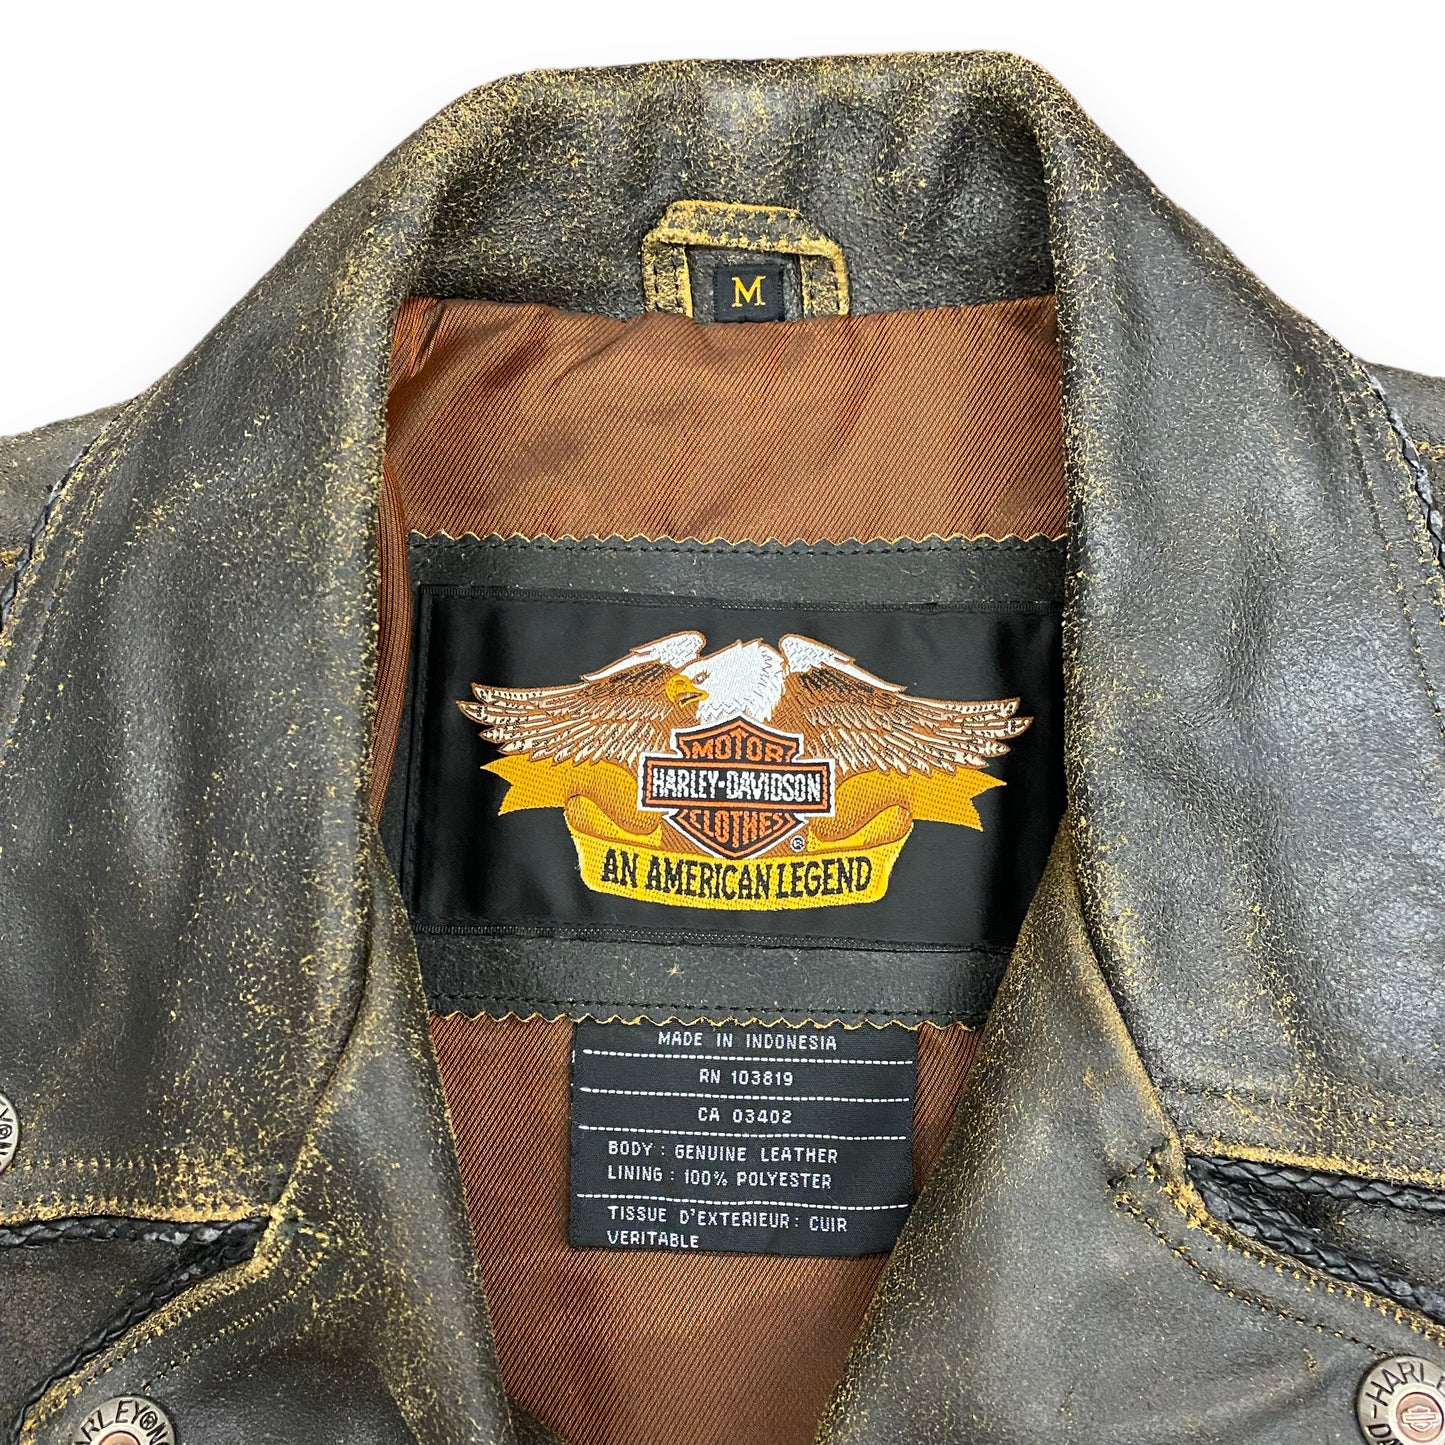 Harley Davidson Motorcycles Billings Brown Leather Riding Jacket - Size Medium